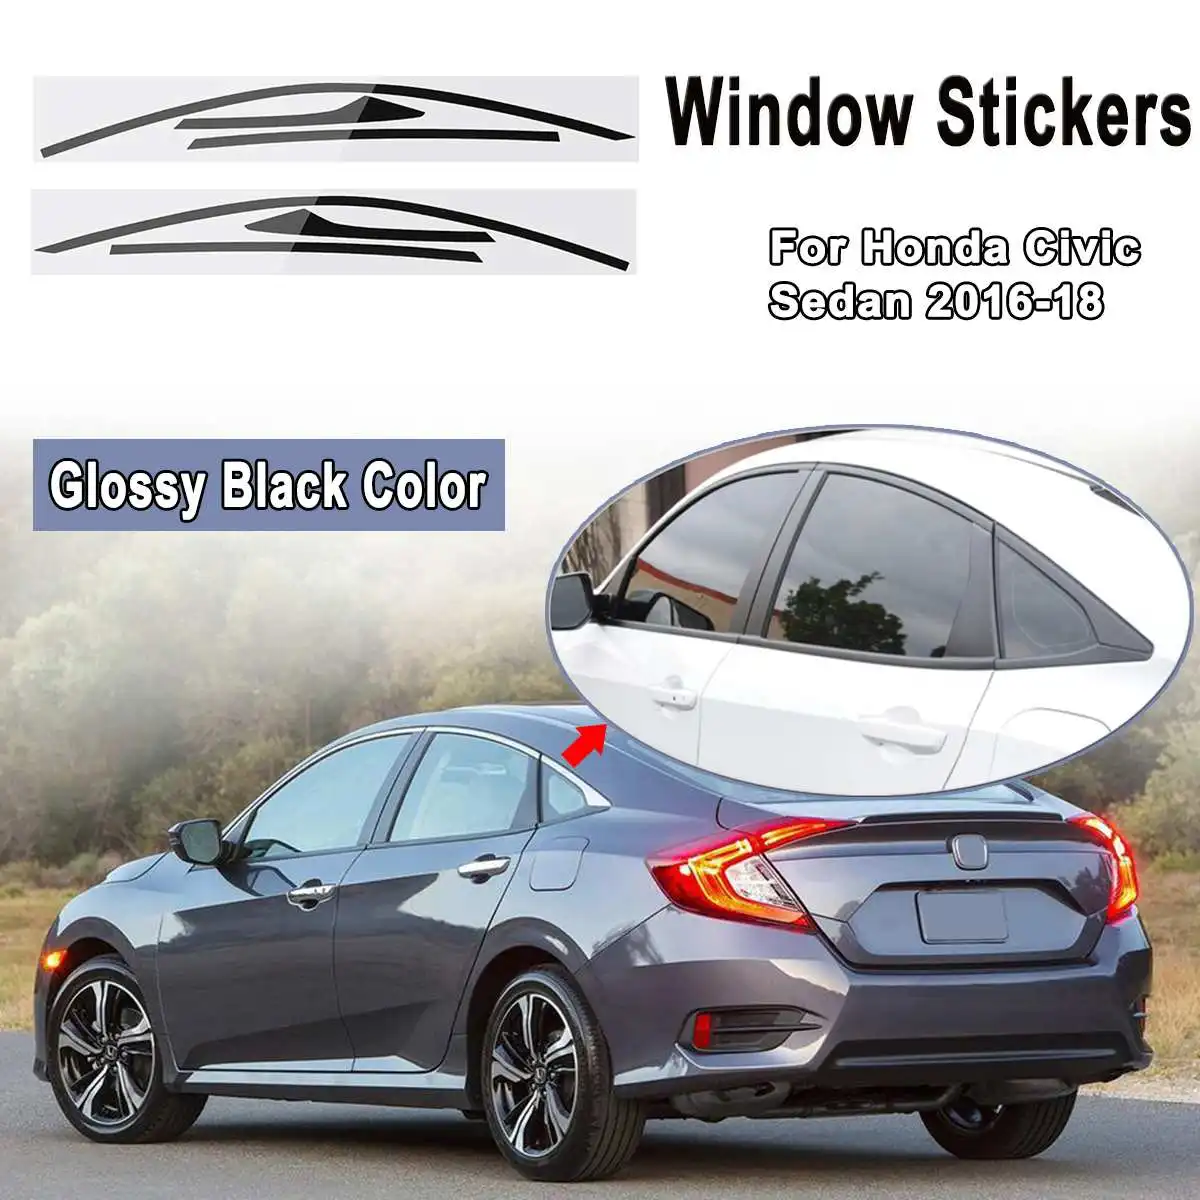 

Matte / Glossy Black Car Sticker Window Frame Trim Stickers Decals For Honda For Civic Sedan 2016 2017 2018 Blackout Overlay